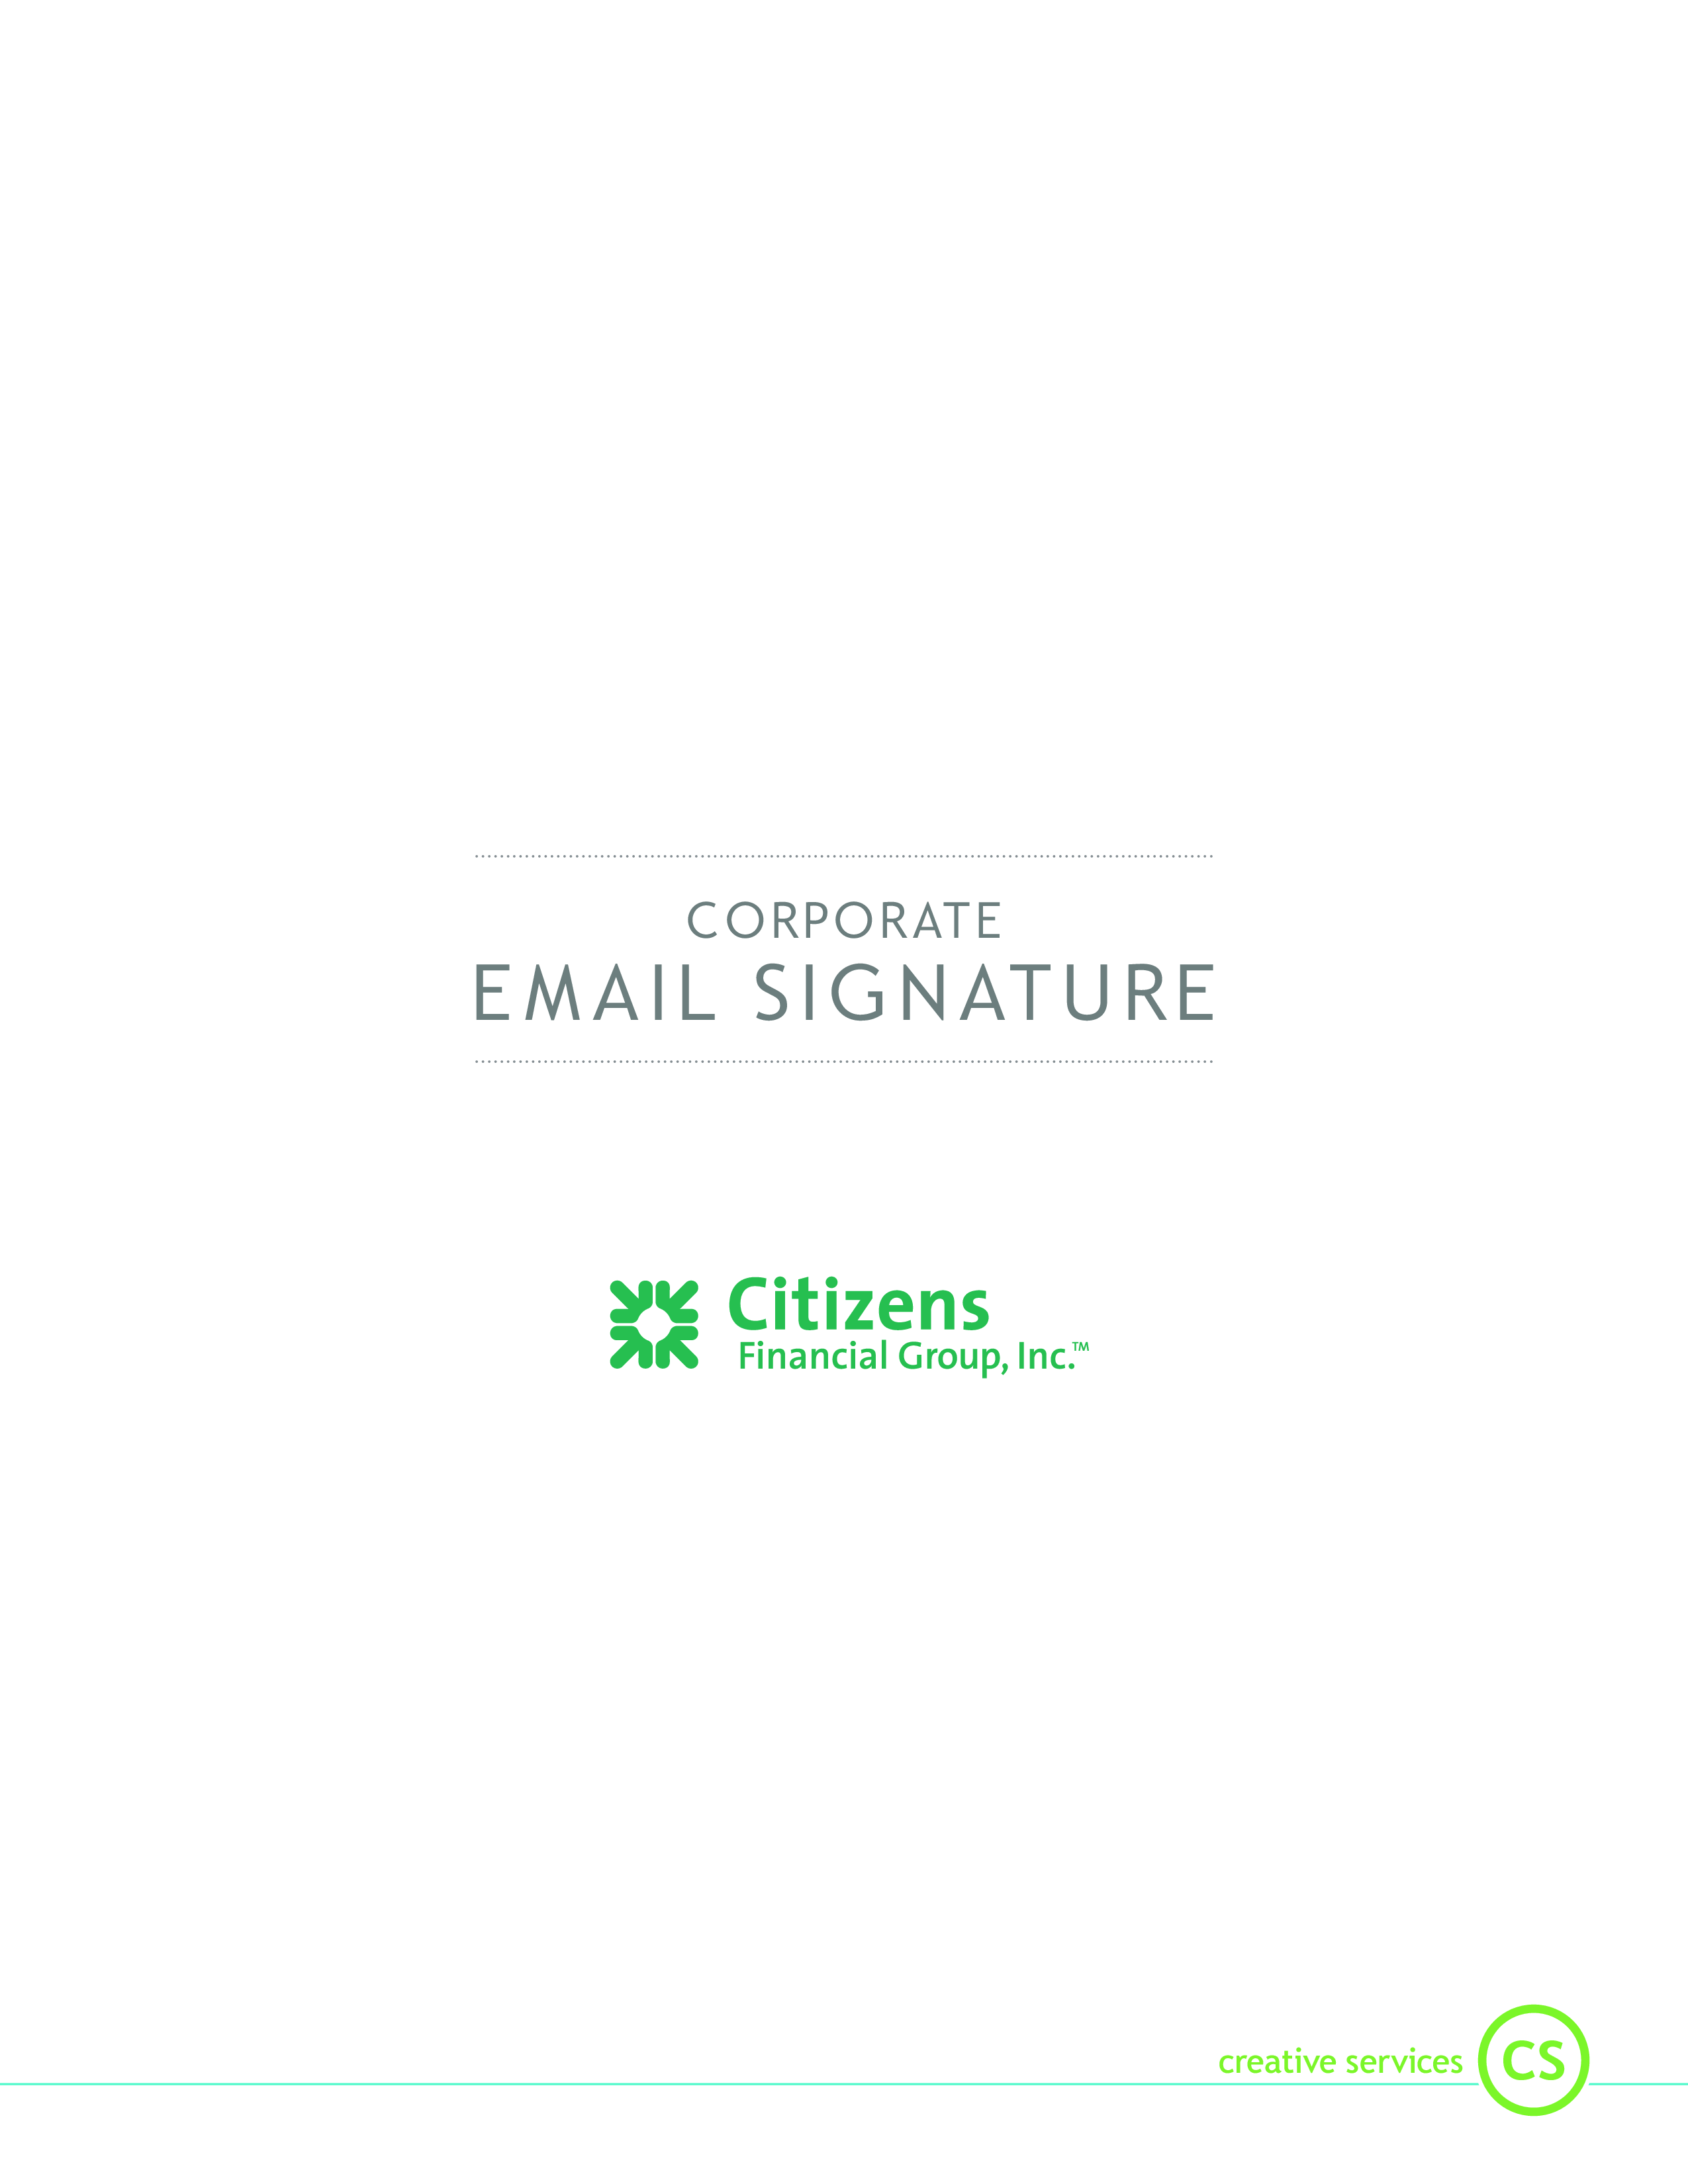 Company Email Signature main image